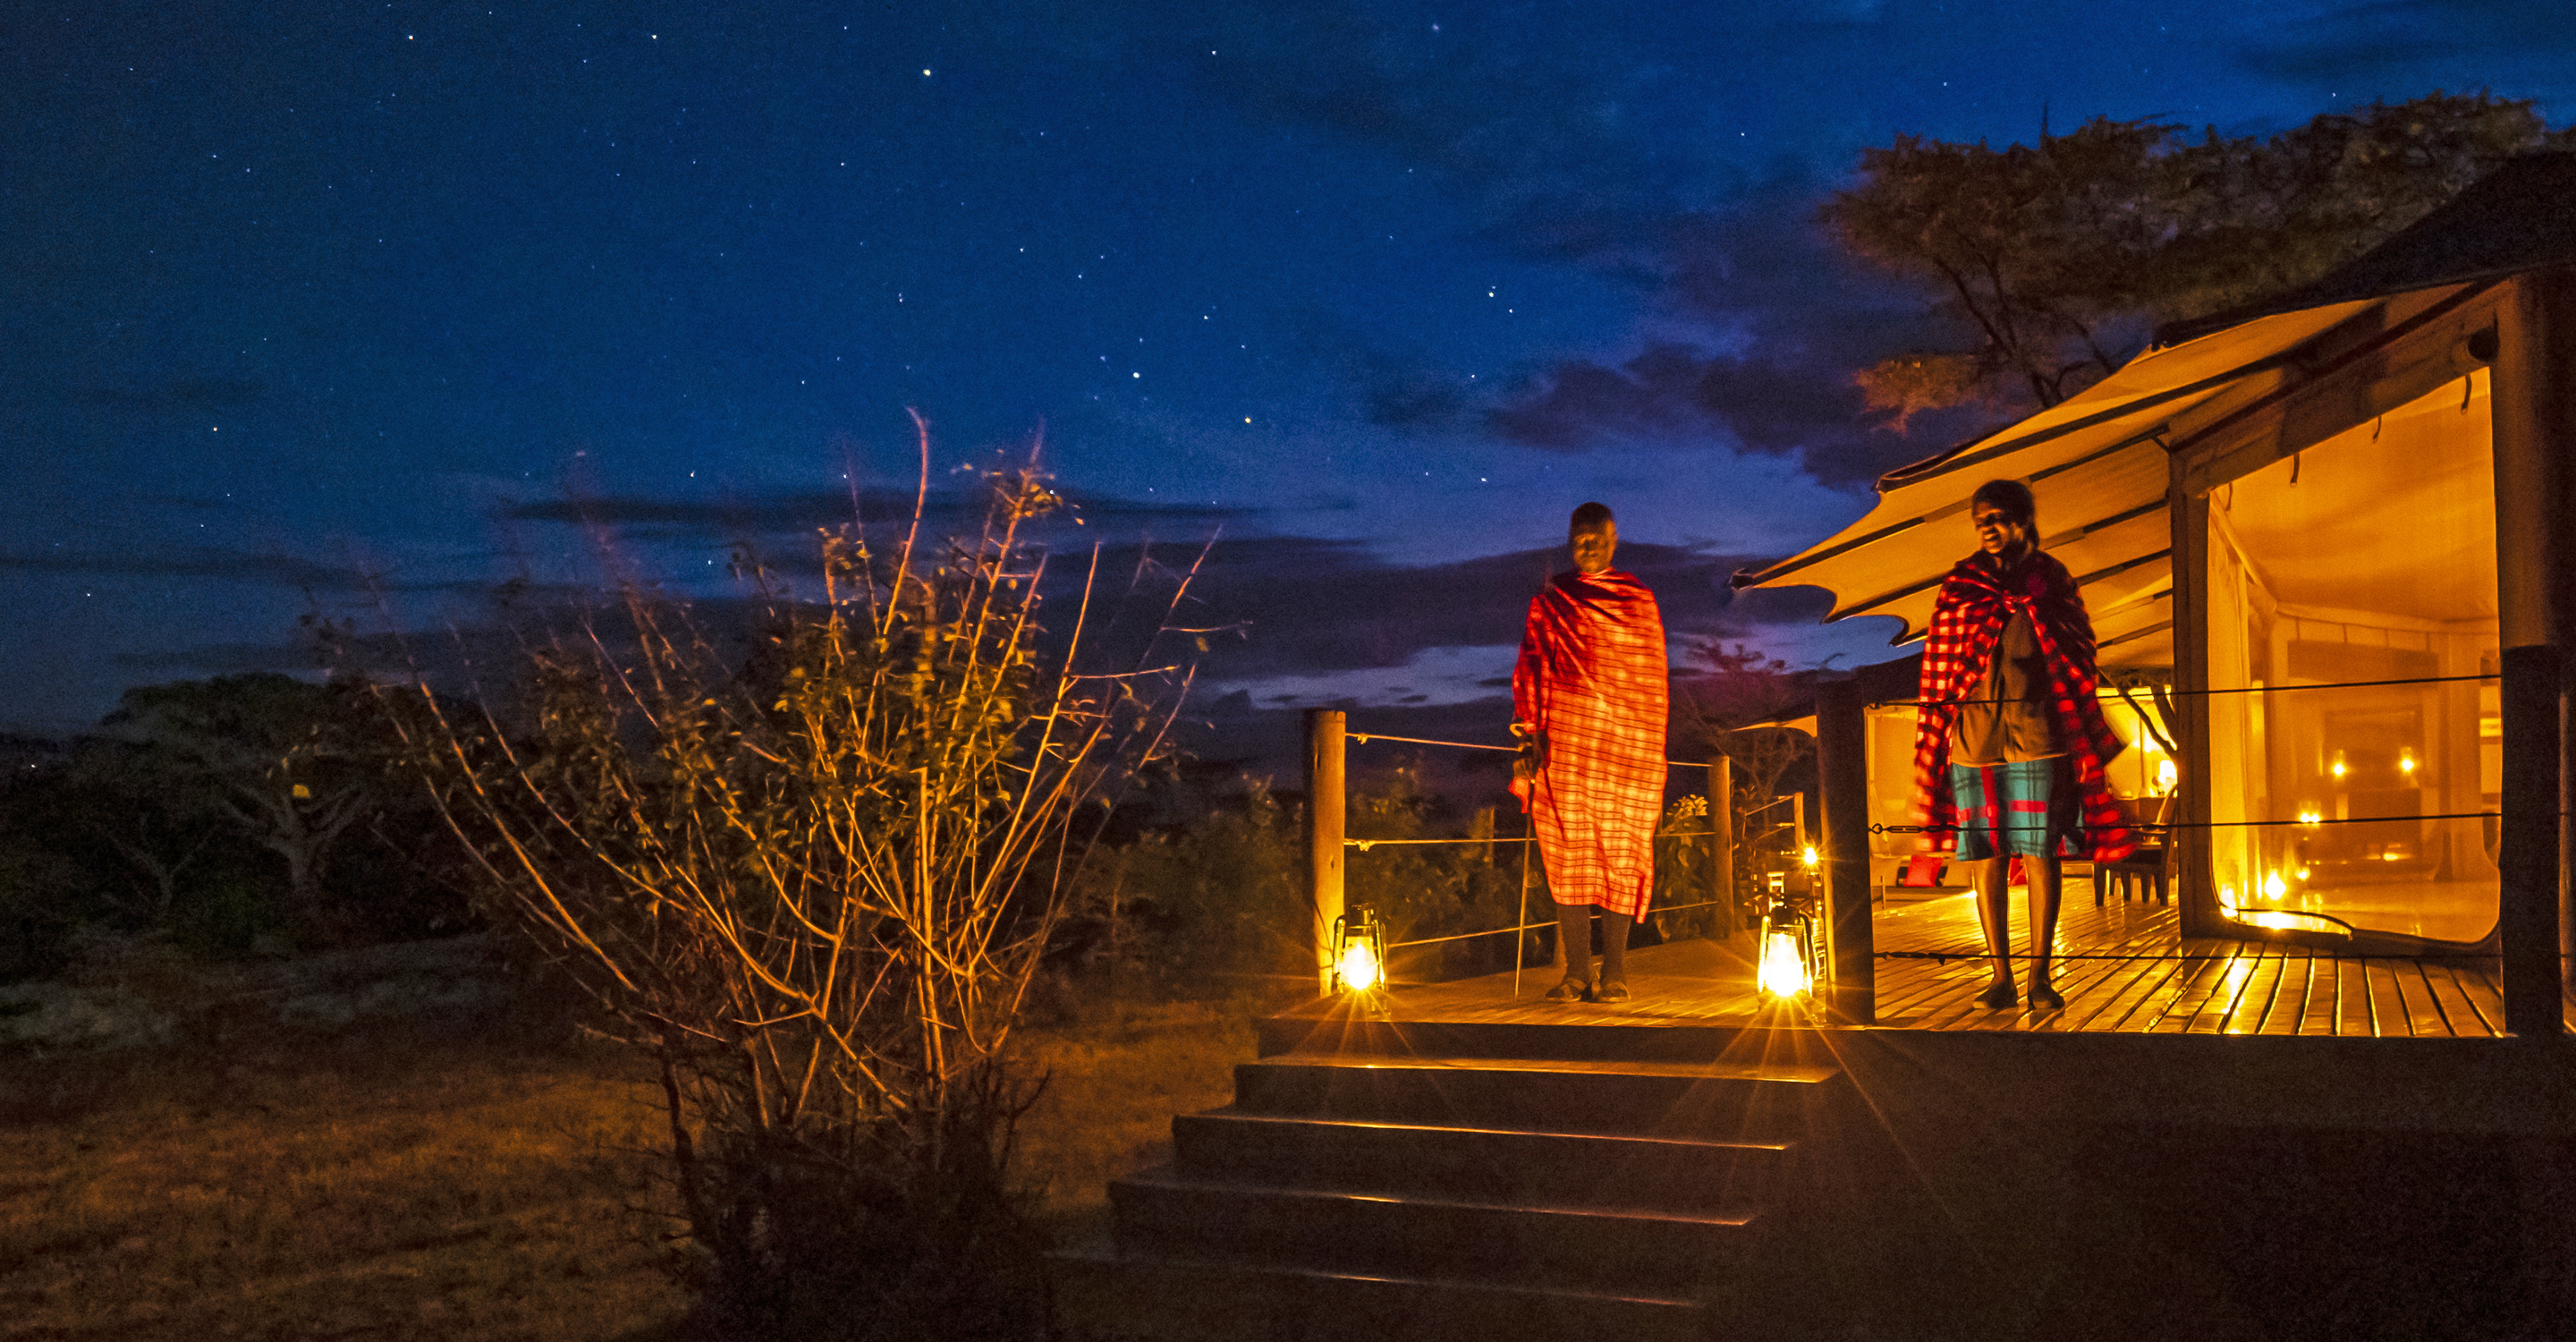 Two Maasai tribesmen at The Emakoko hotel in the evening, Kenya